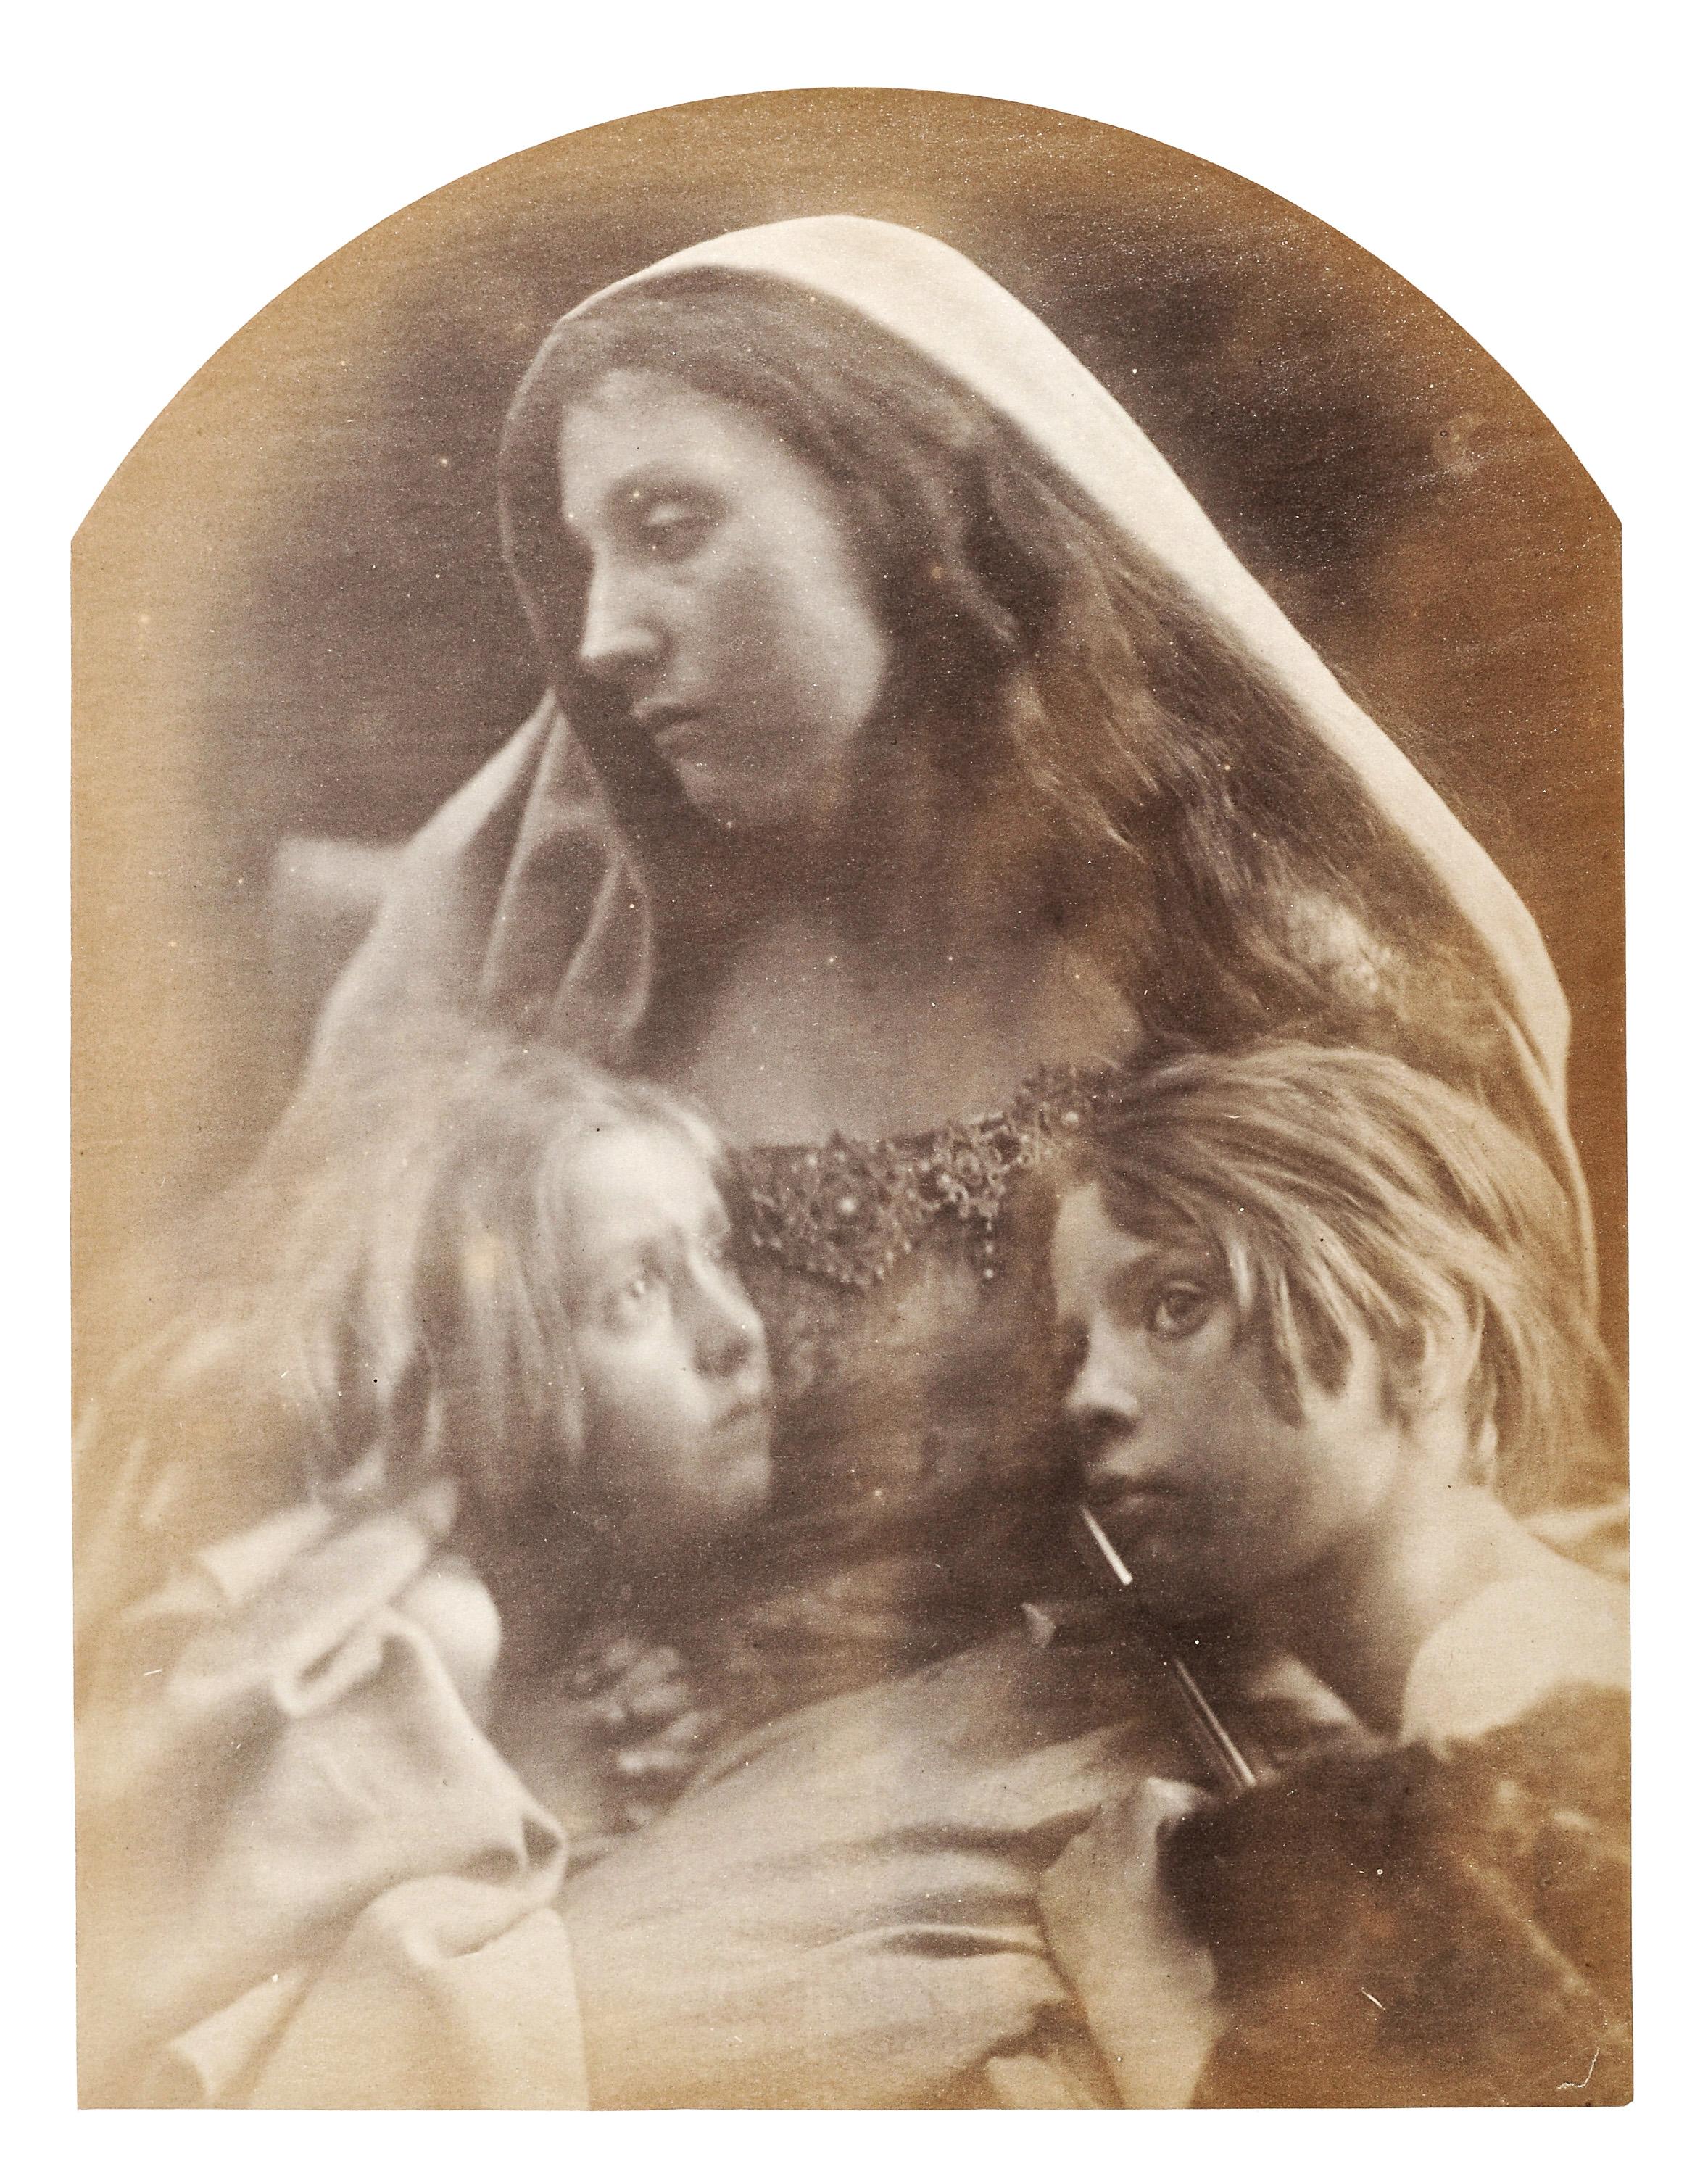 Julia Margaret Cameron Portrait Photograph - Saint Family: Rosie Prince, Mary Hillier & Freddy Gould, 19th Century Photograph